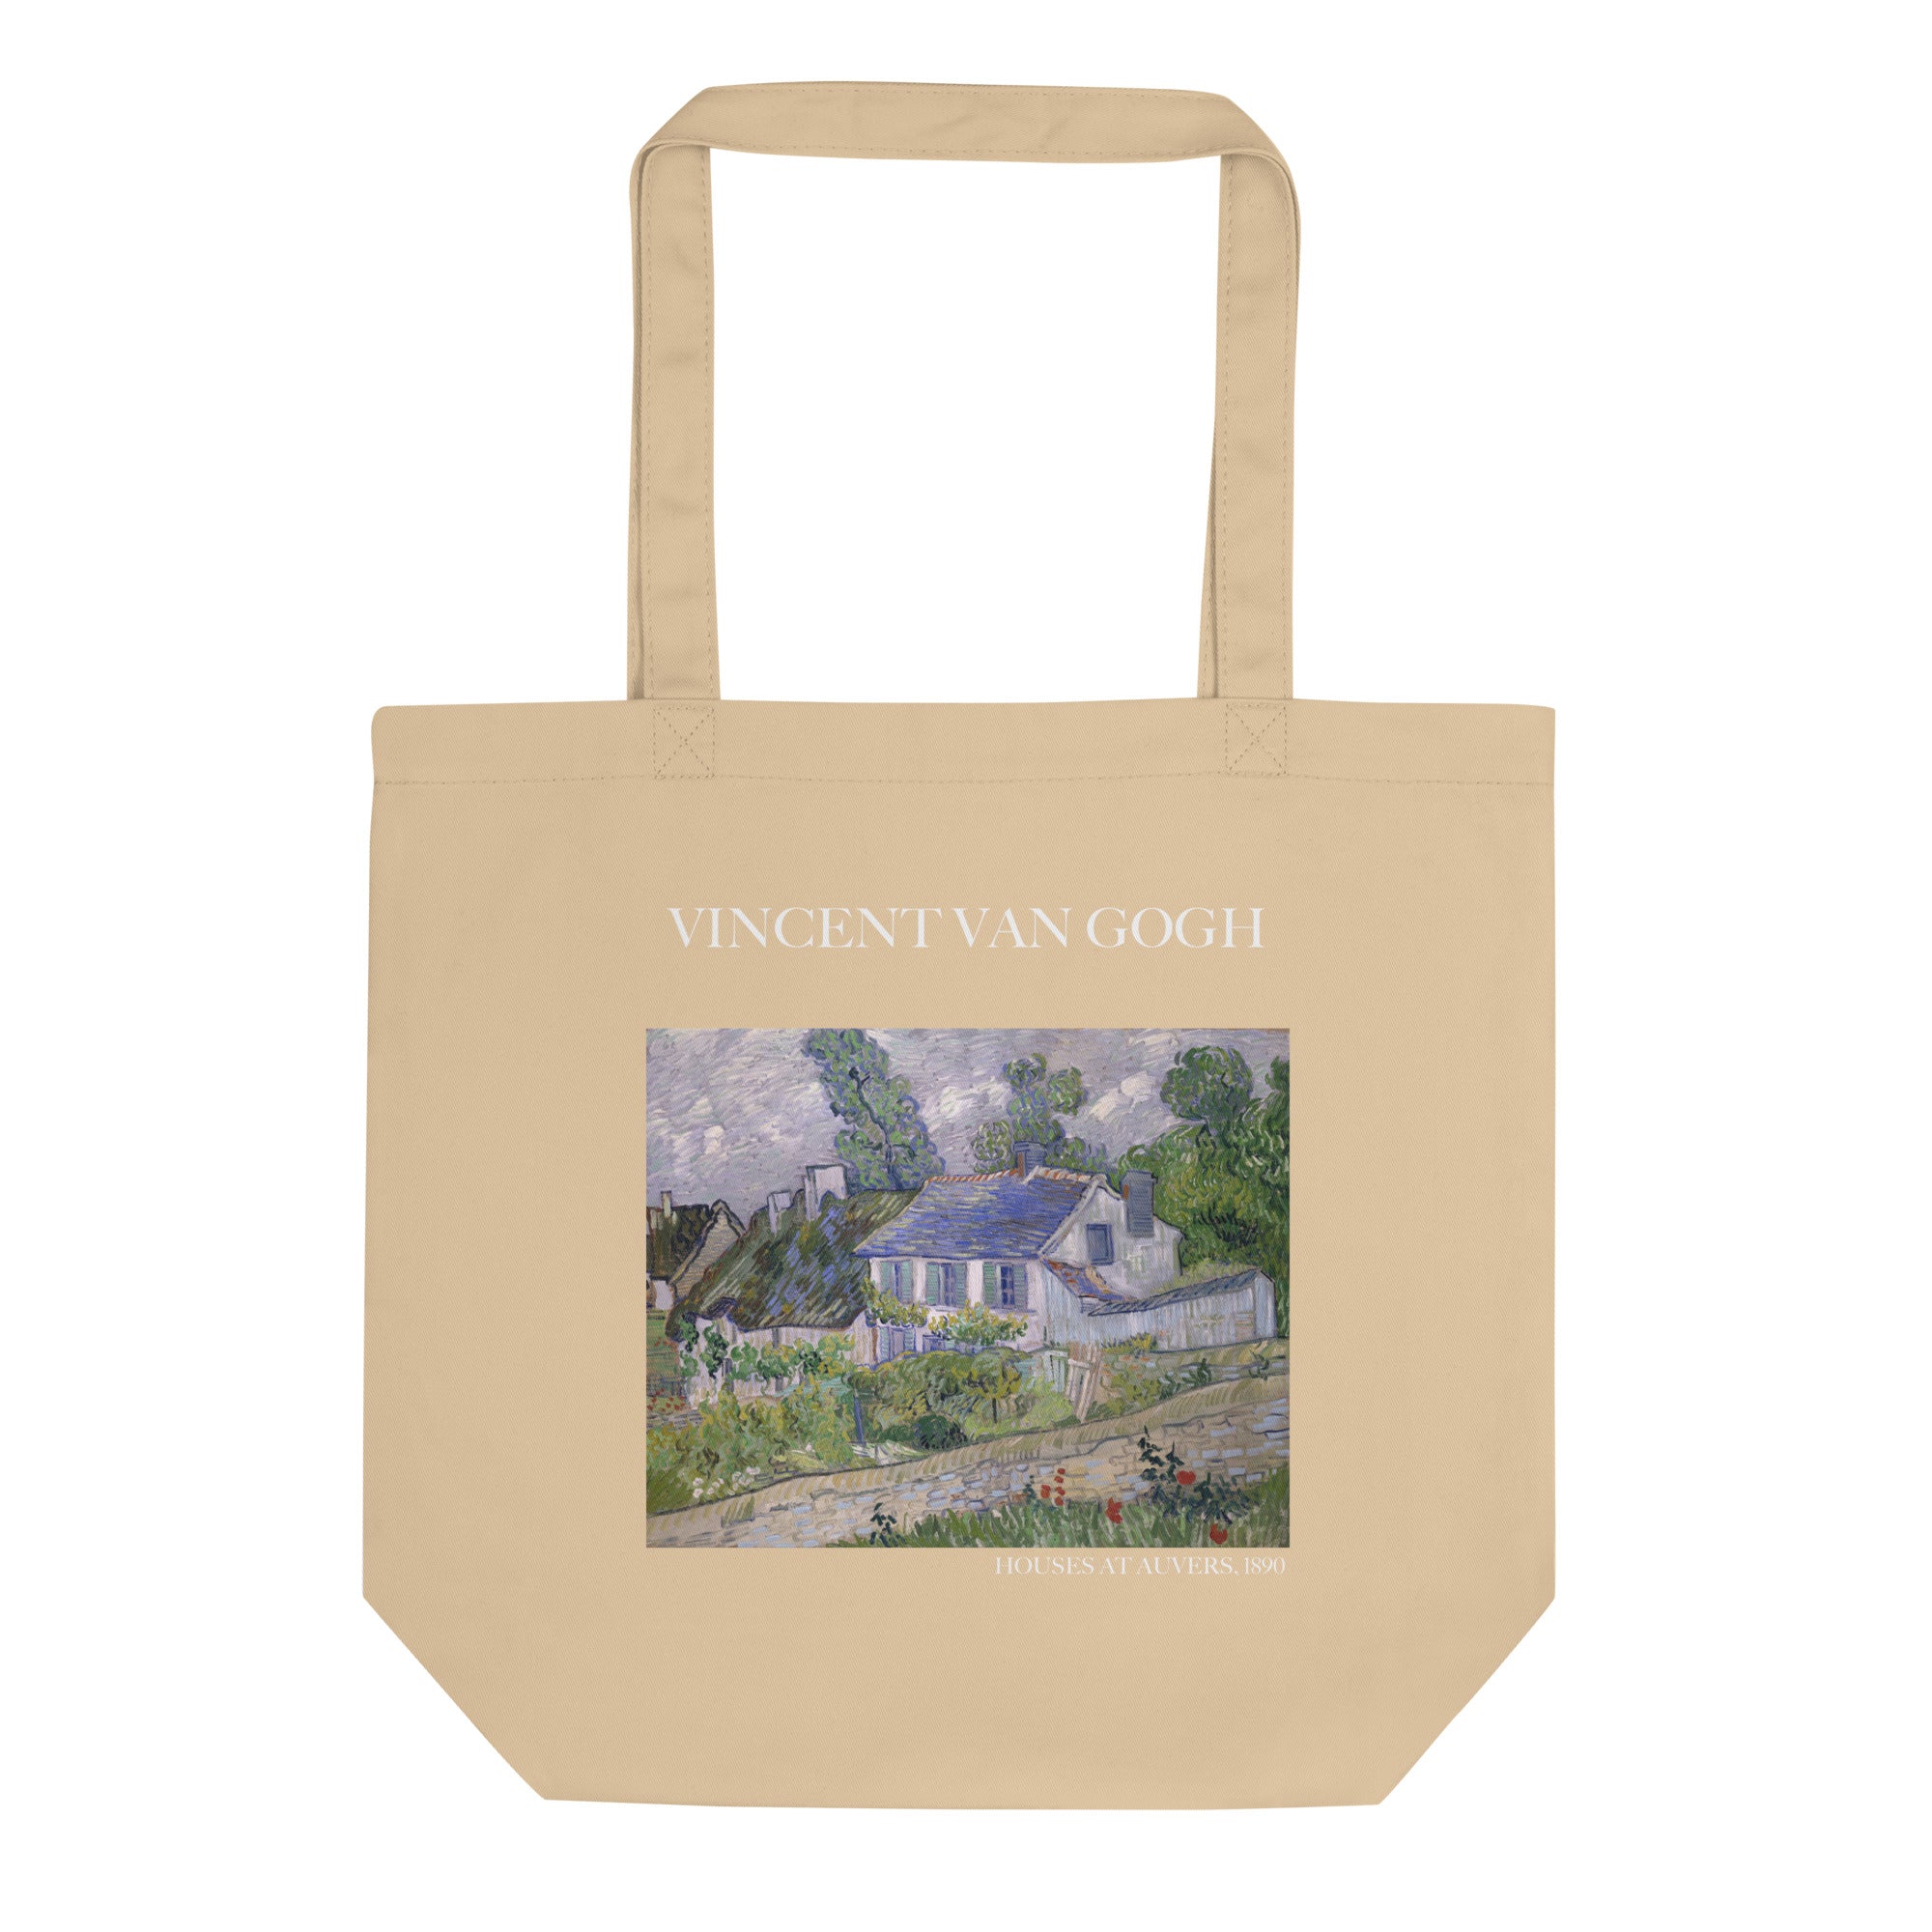 Vincent van Gogh 'Houses at Auvers' Famous Painting Totebag | Eco Friendly Art Tote Bag